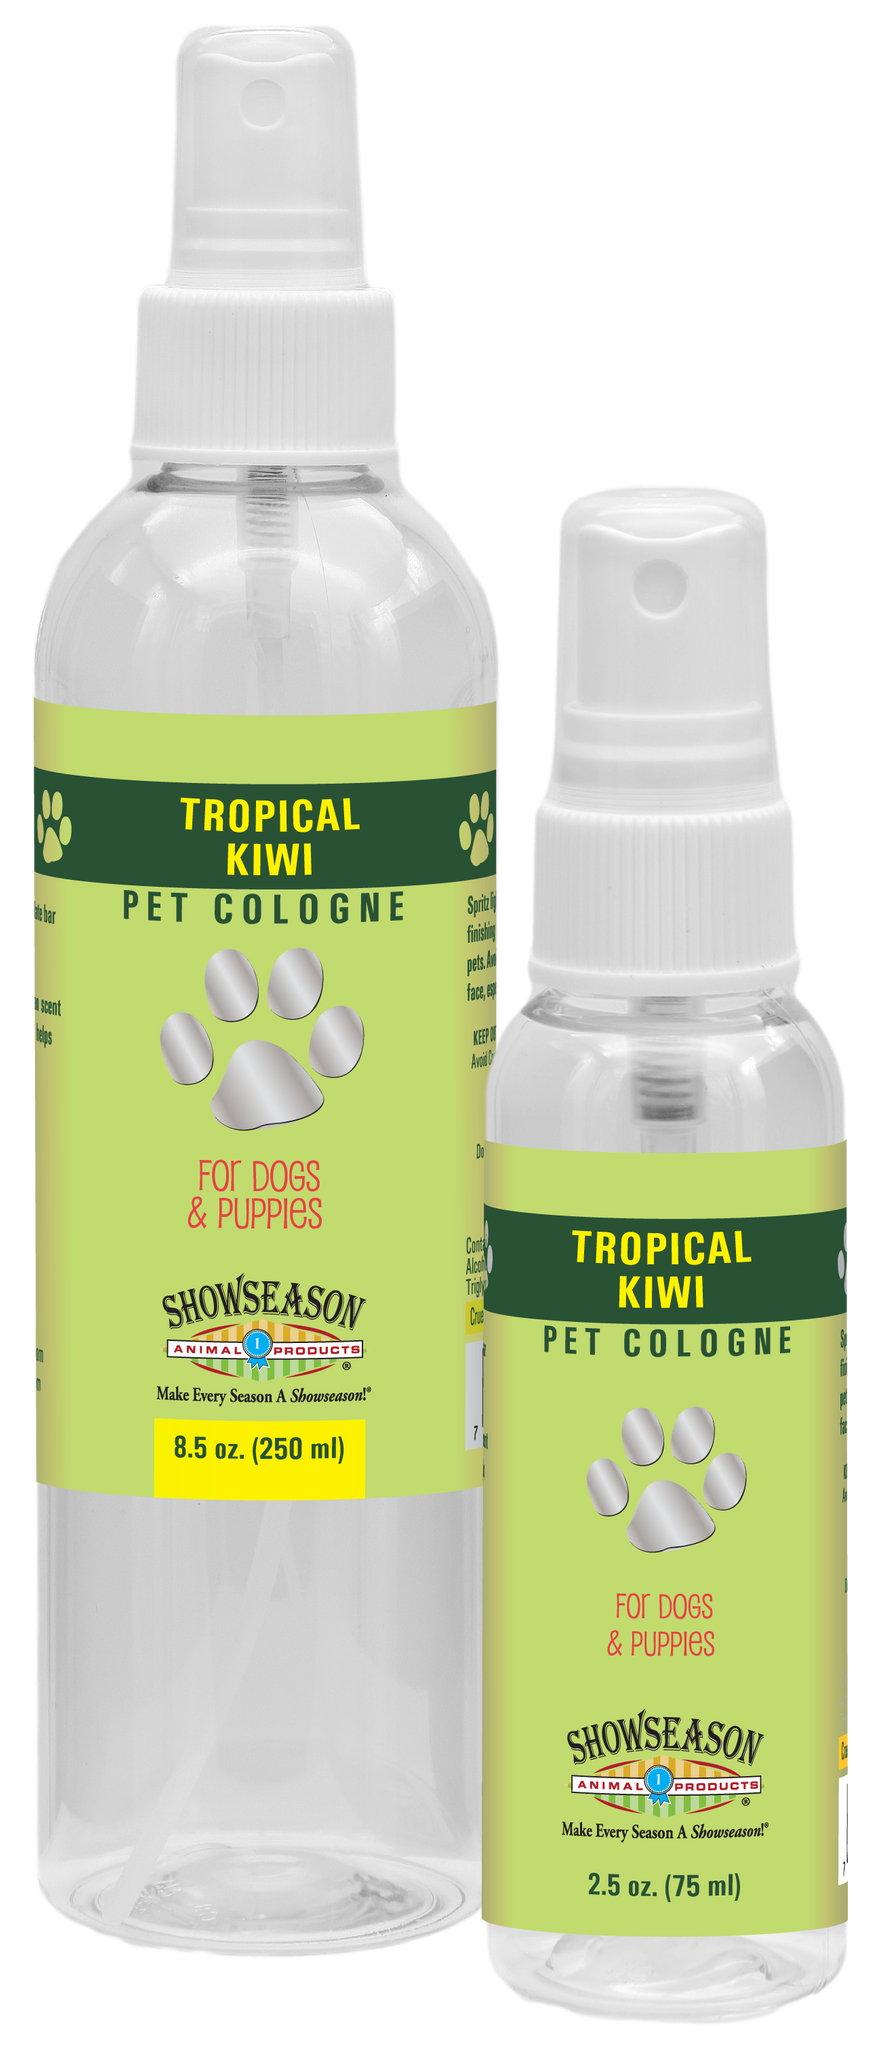 Tropical Kiwi Pet Cologne | Showseason®